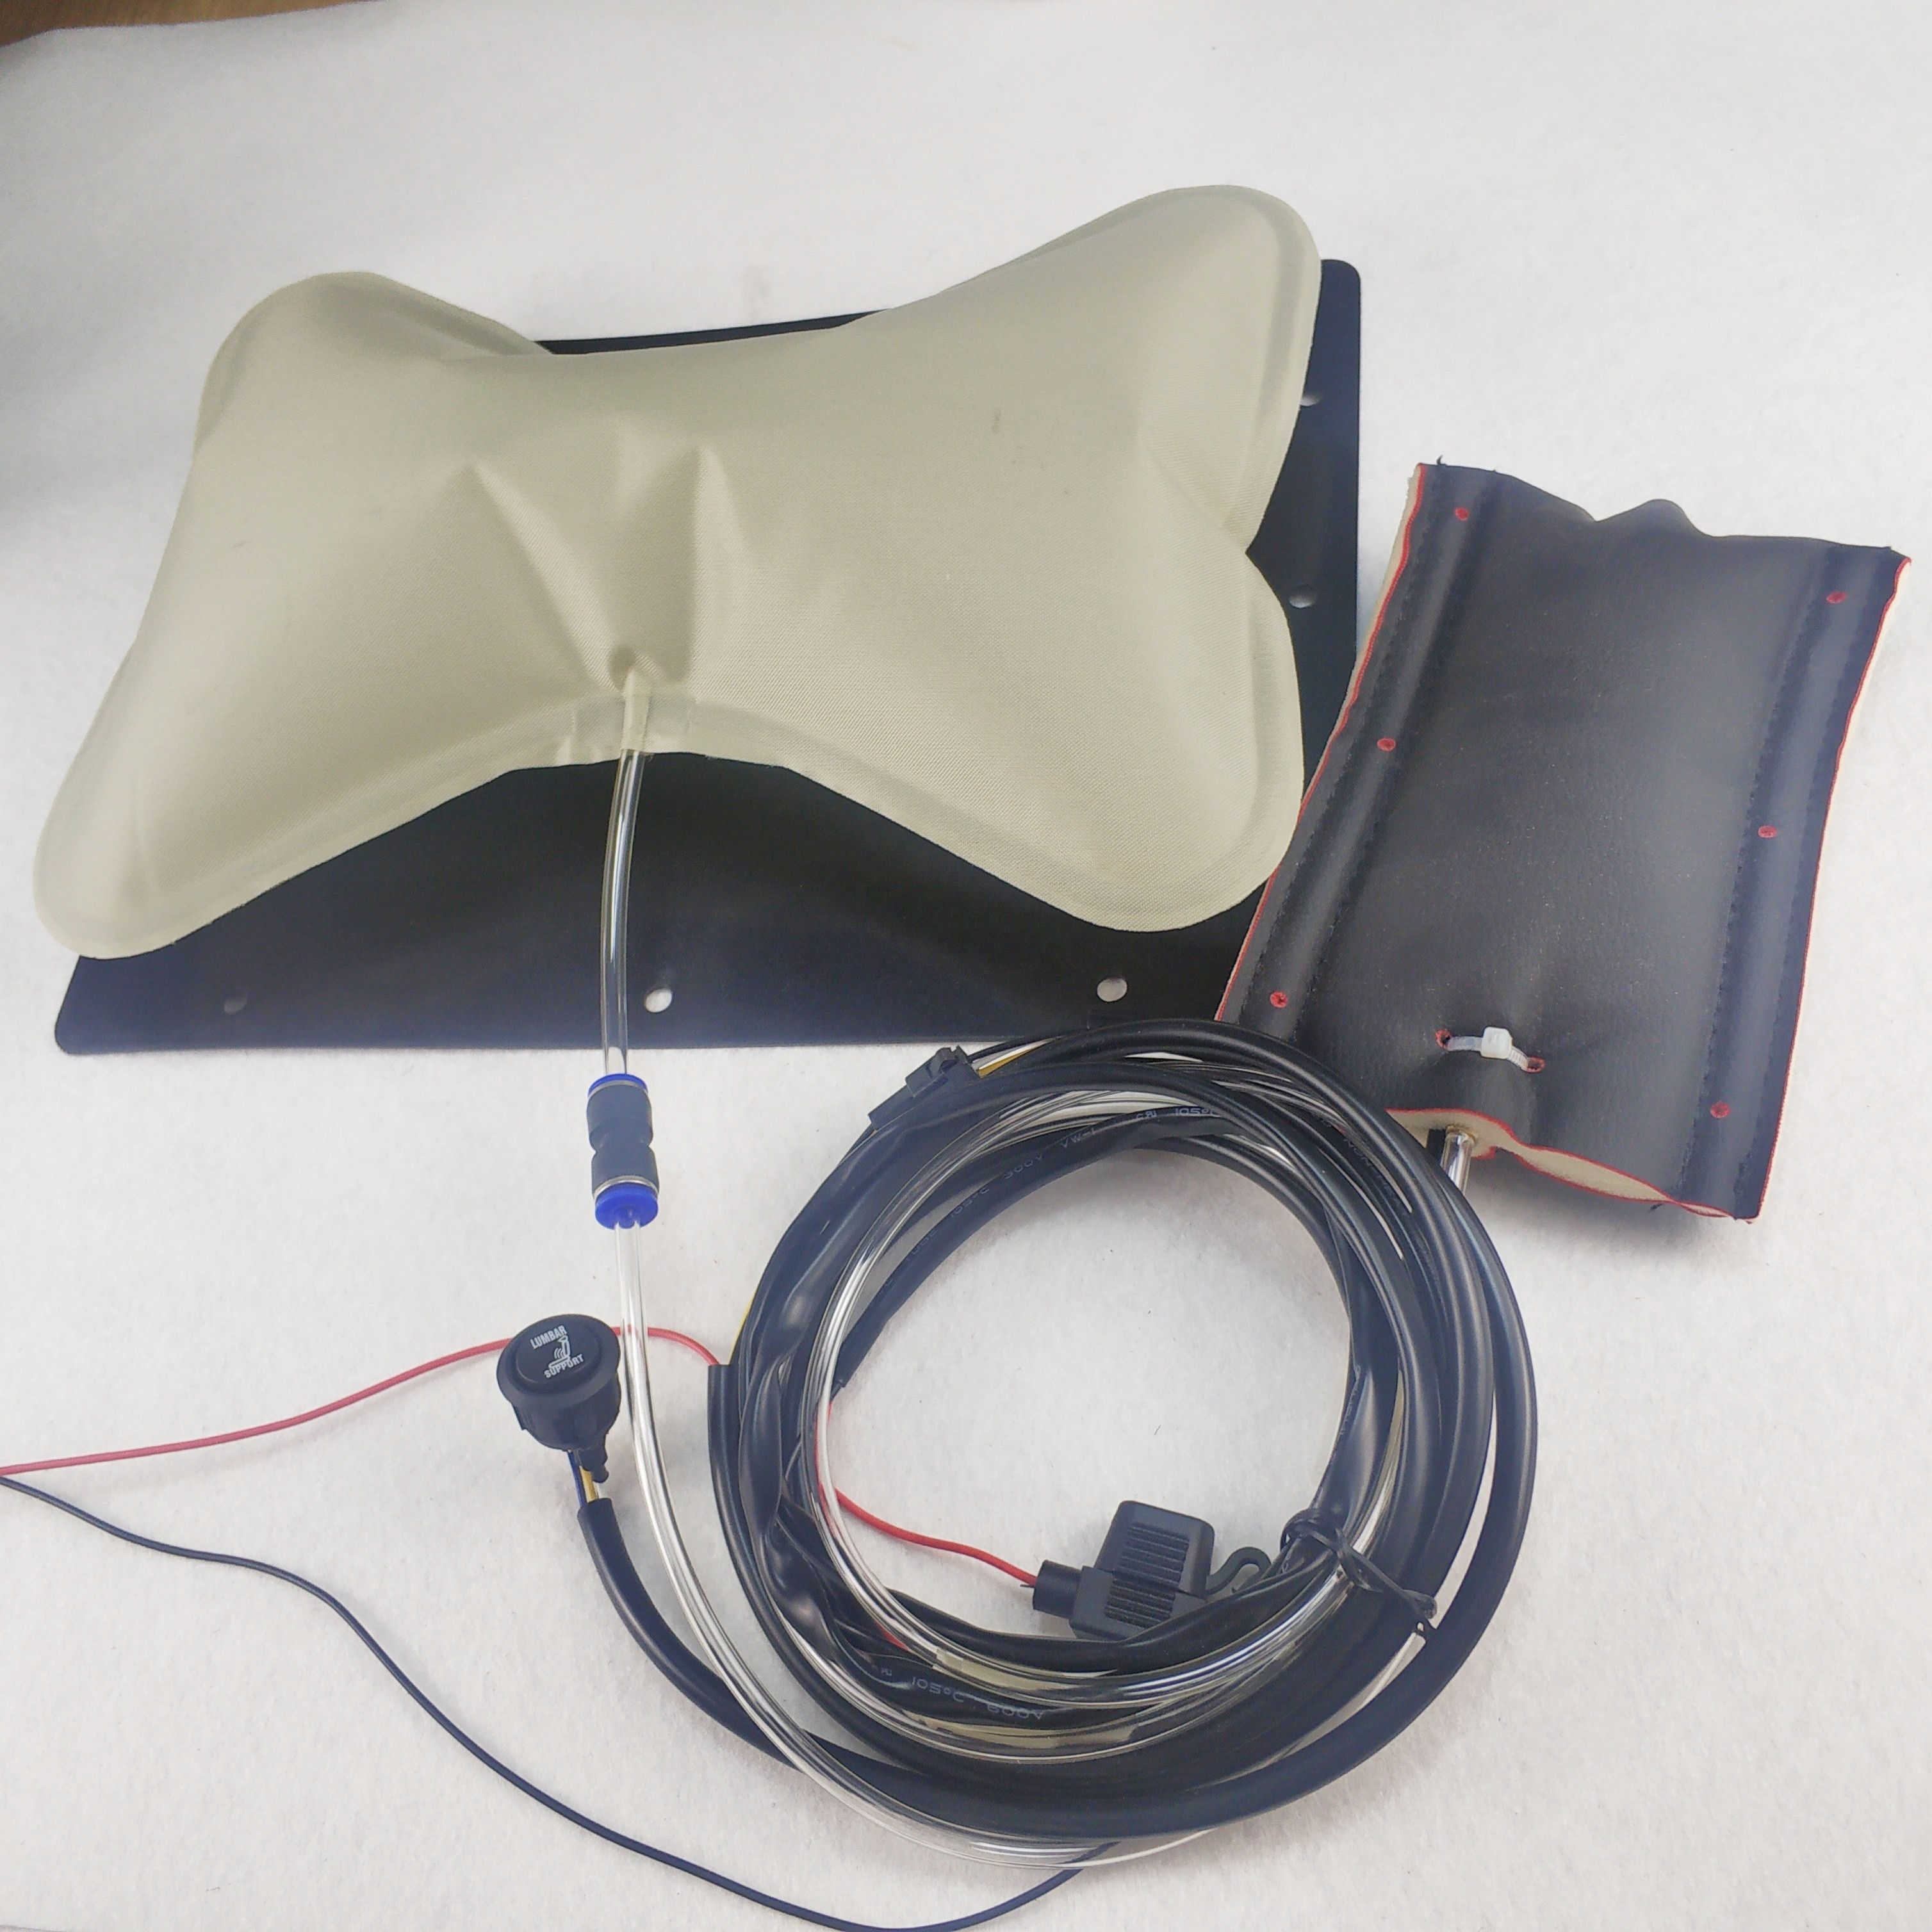 pneumatic electric lumbar auto seat air Embedded lumbar airbag bladder switch comfort support seat cushion pillow massage